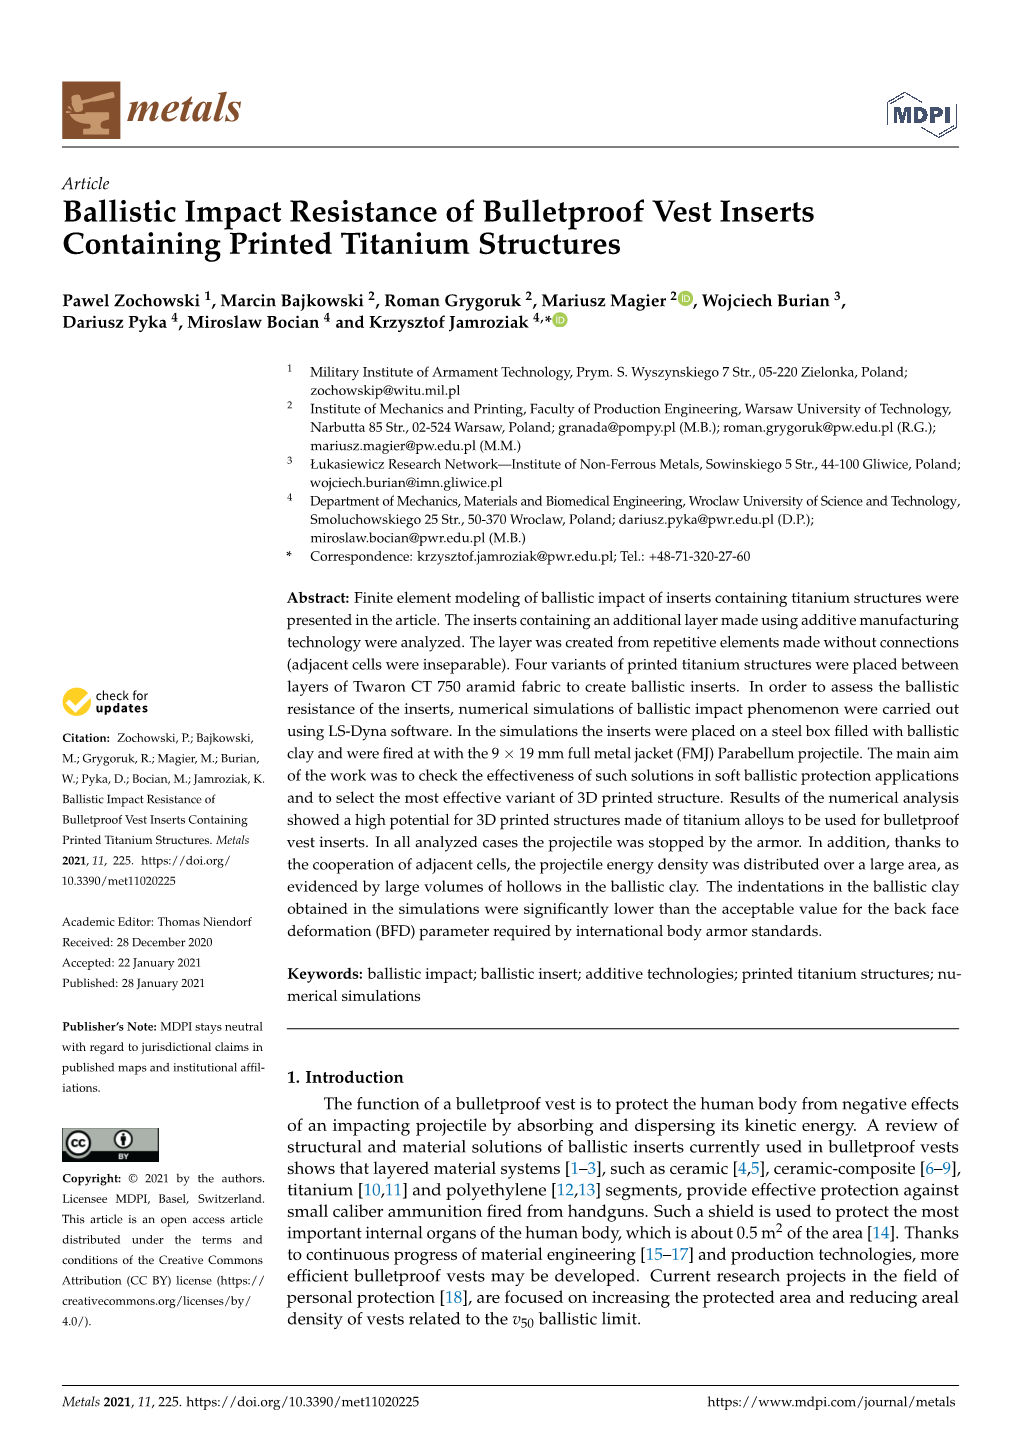 Ballistic Impact Resistance of Bulletproof Vest Inserts Containing Printed Titanium Structures